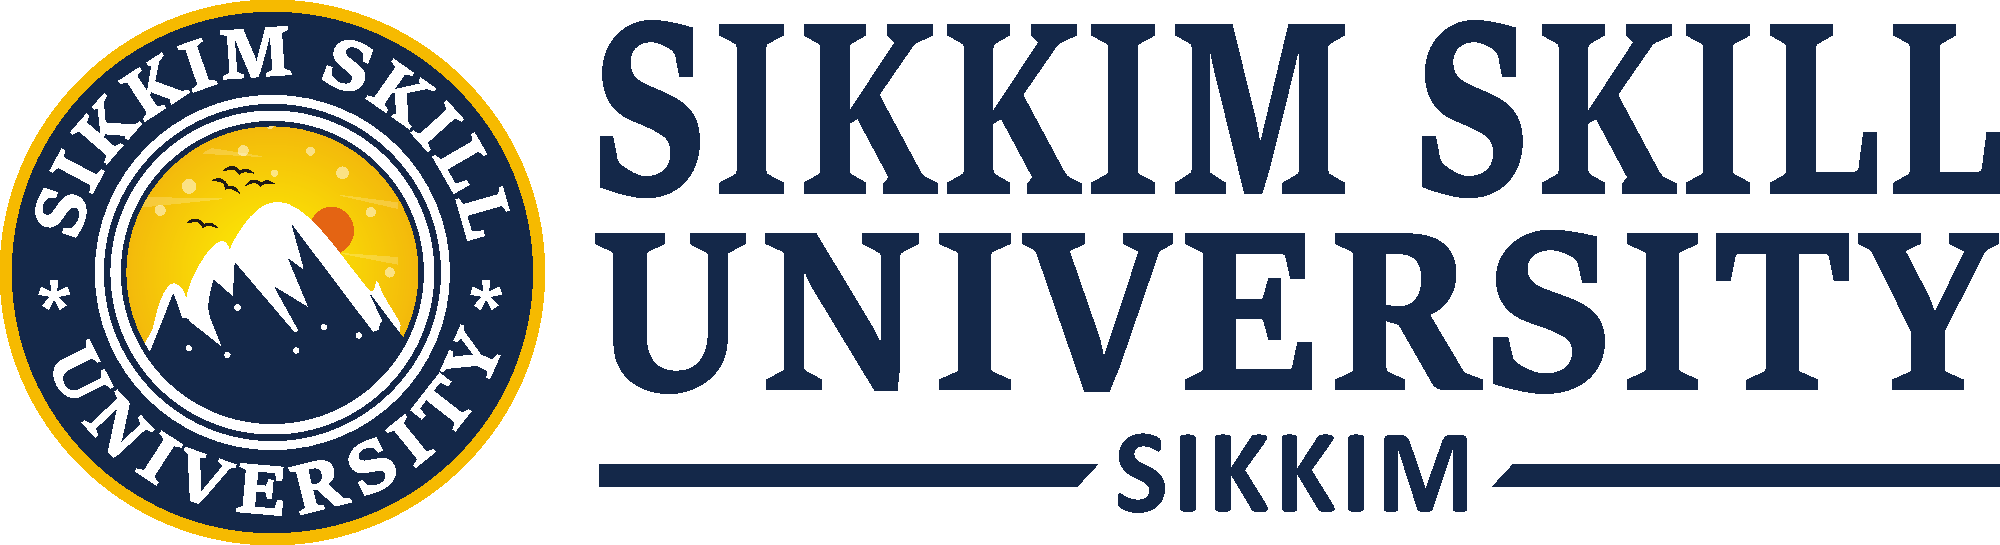 Sikkim Skill University